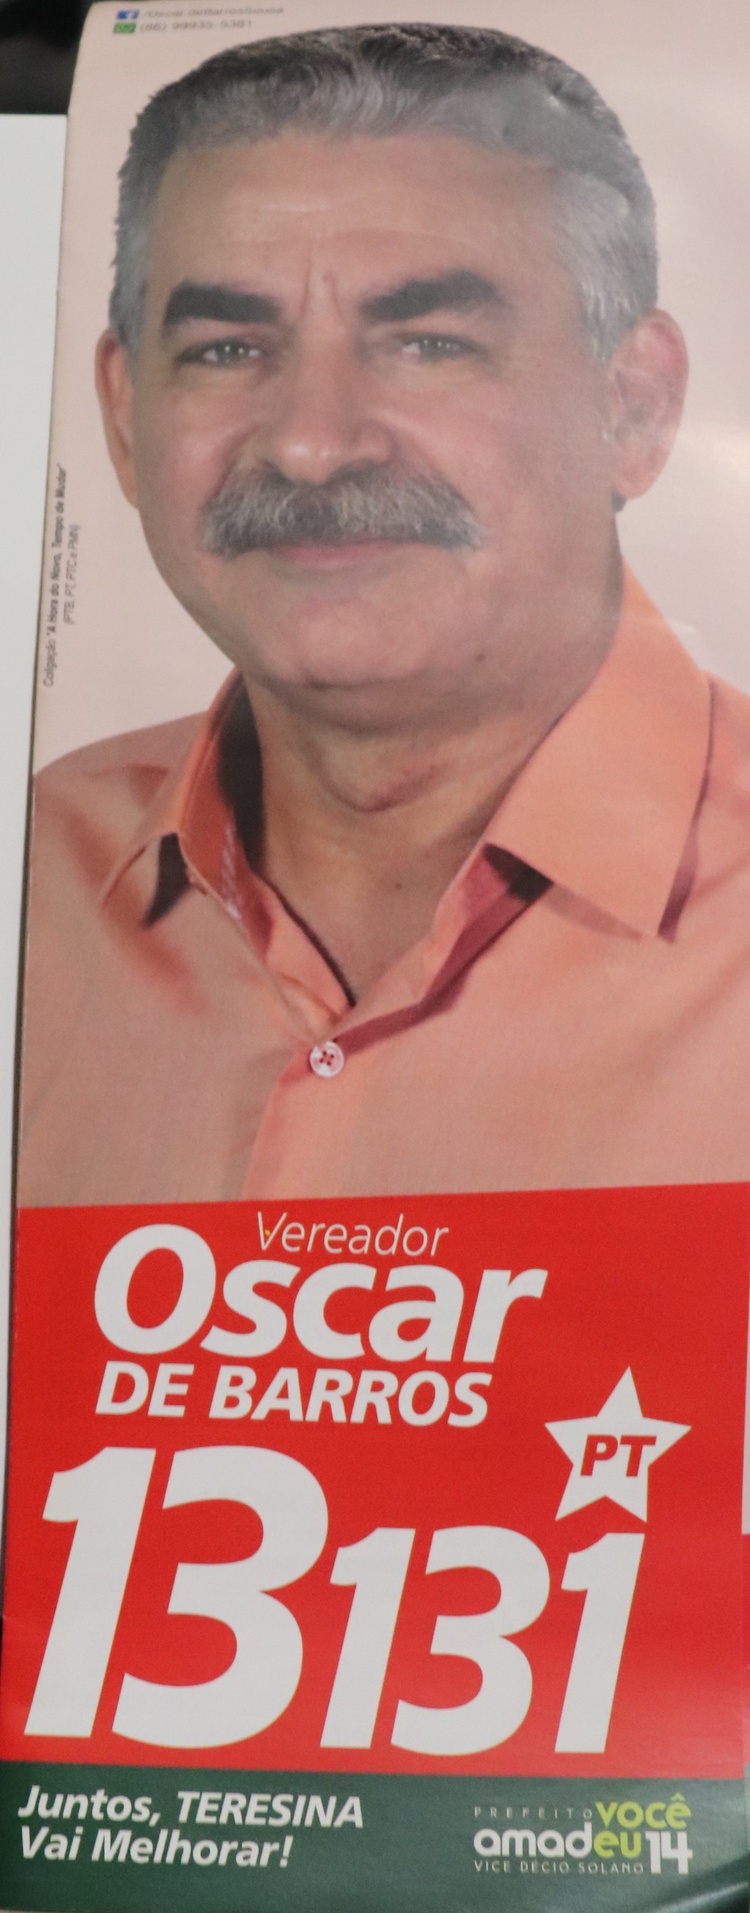 Campanha do Oscar de Barros